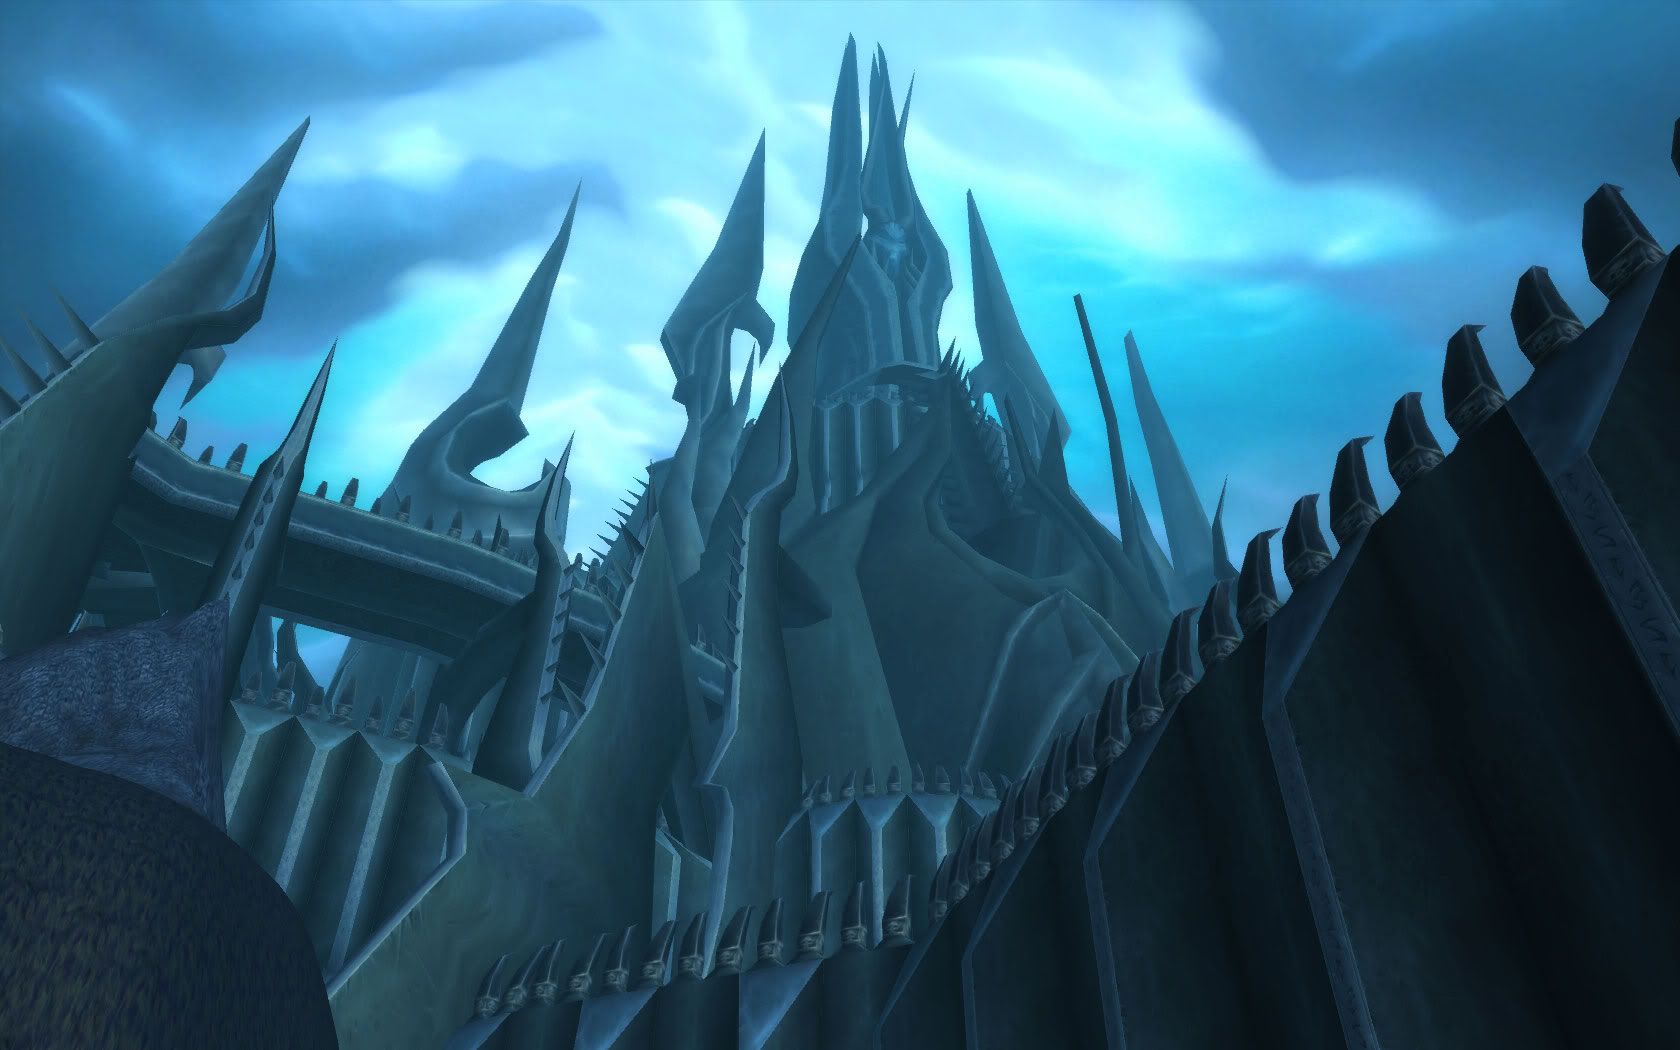 Icecrown Citadel